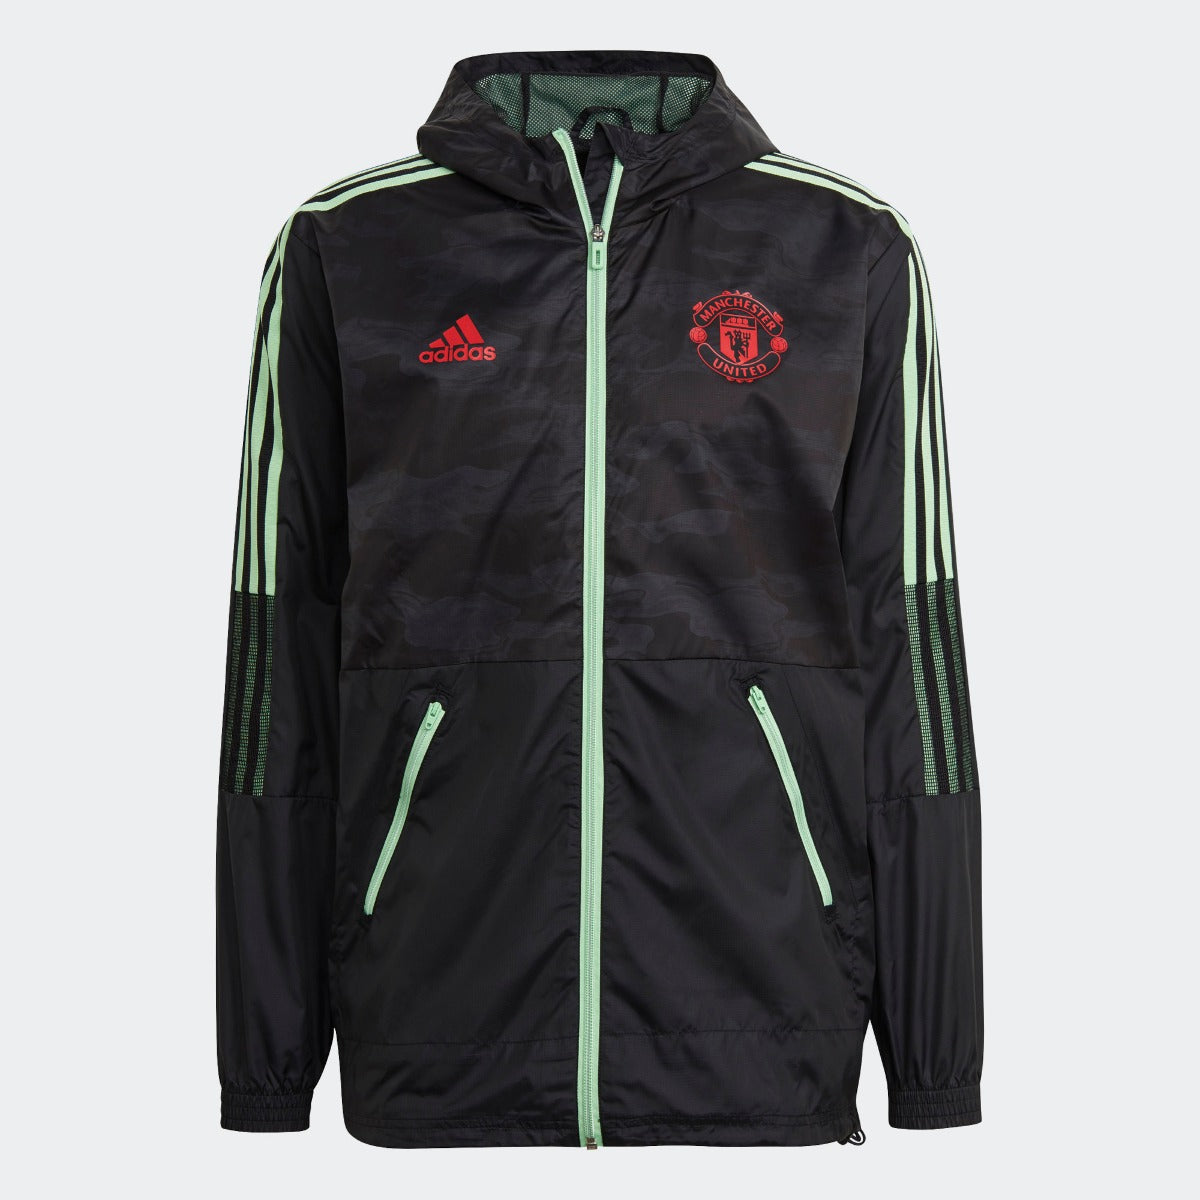 Adidas 2021 Manchester United Windbreaker Jacket - Black (Front)